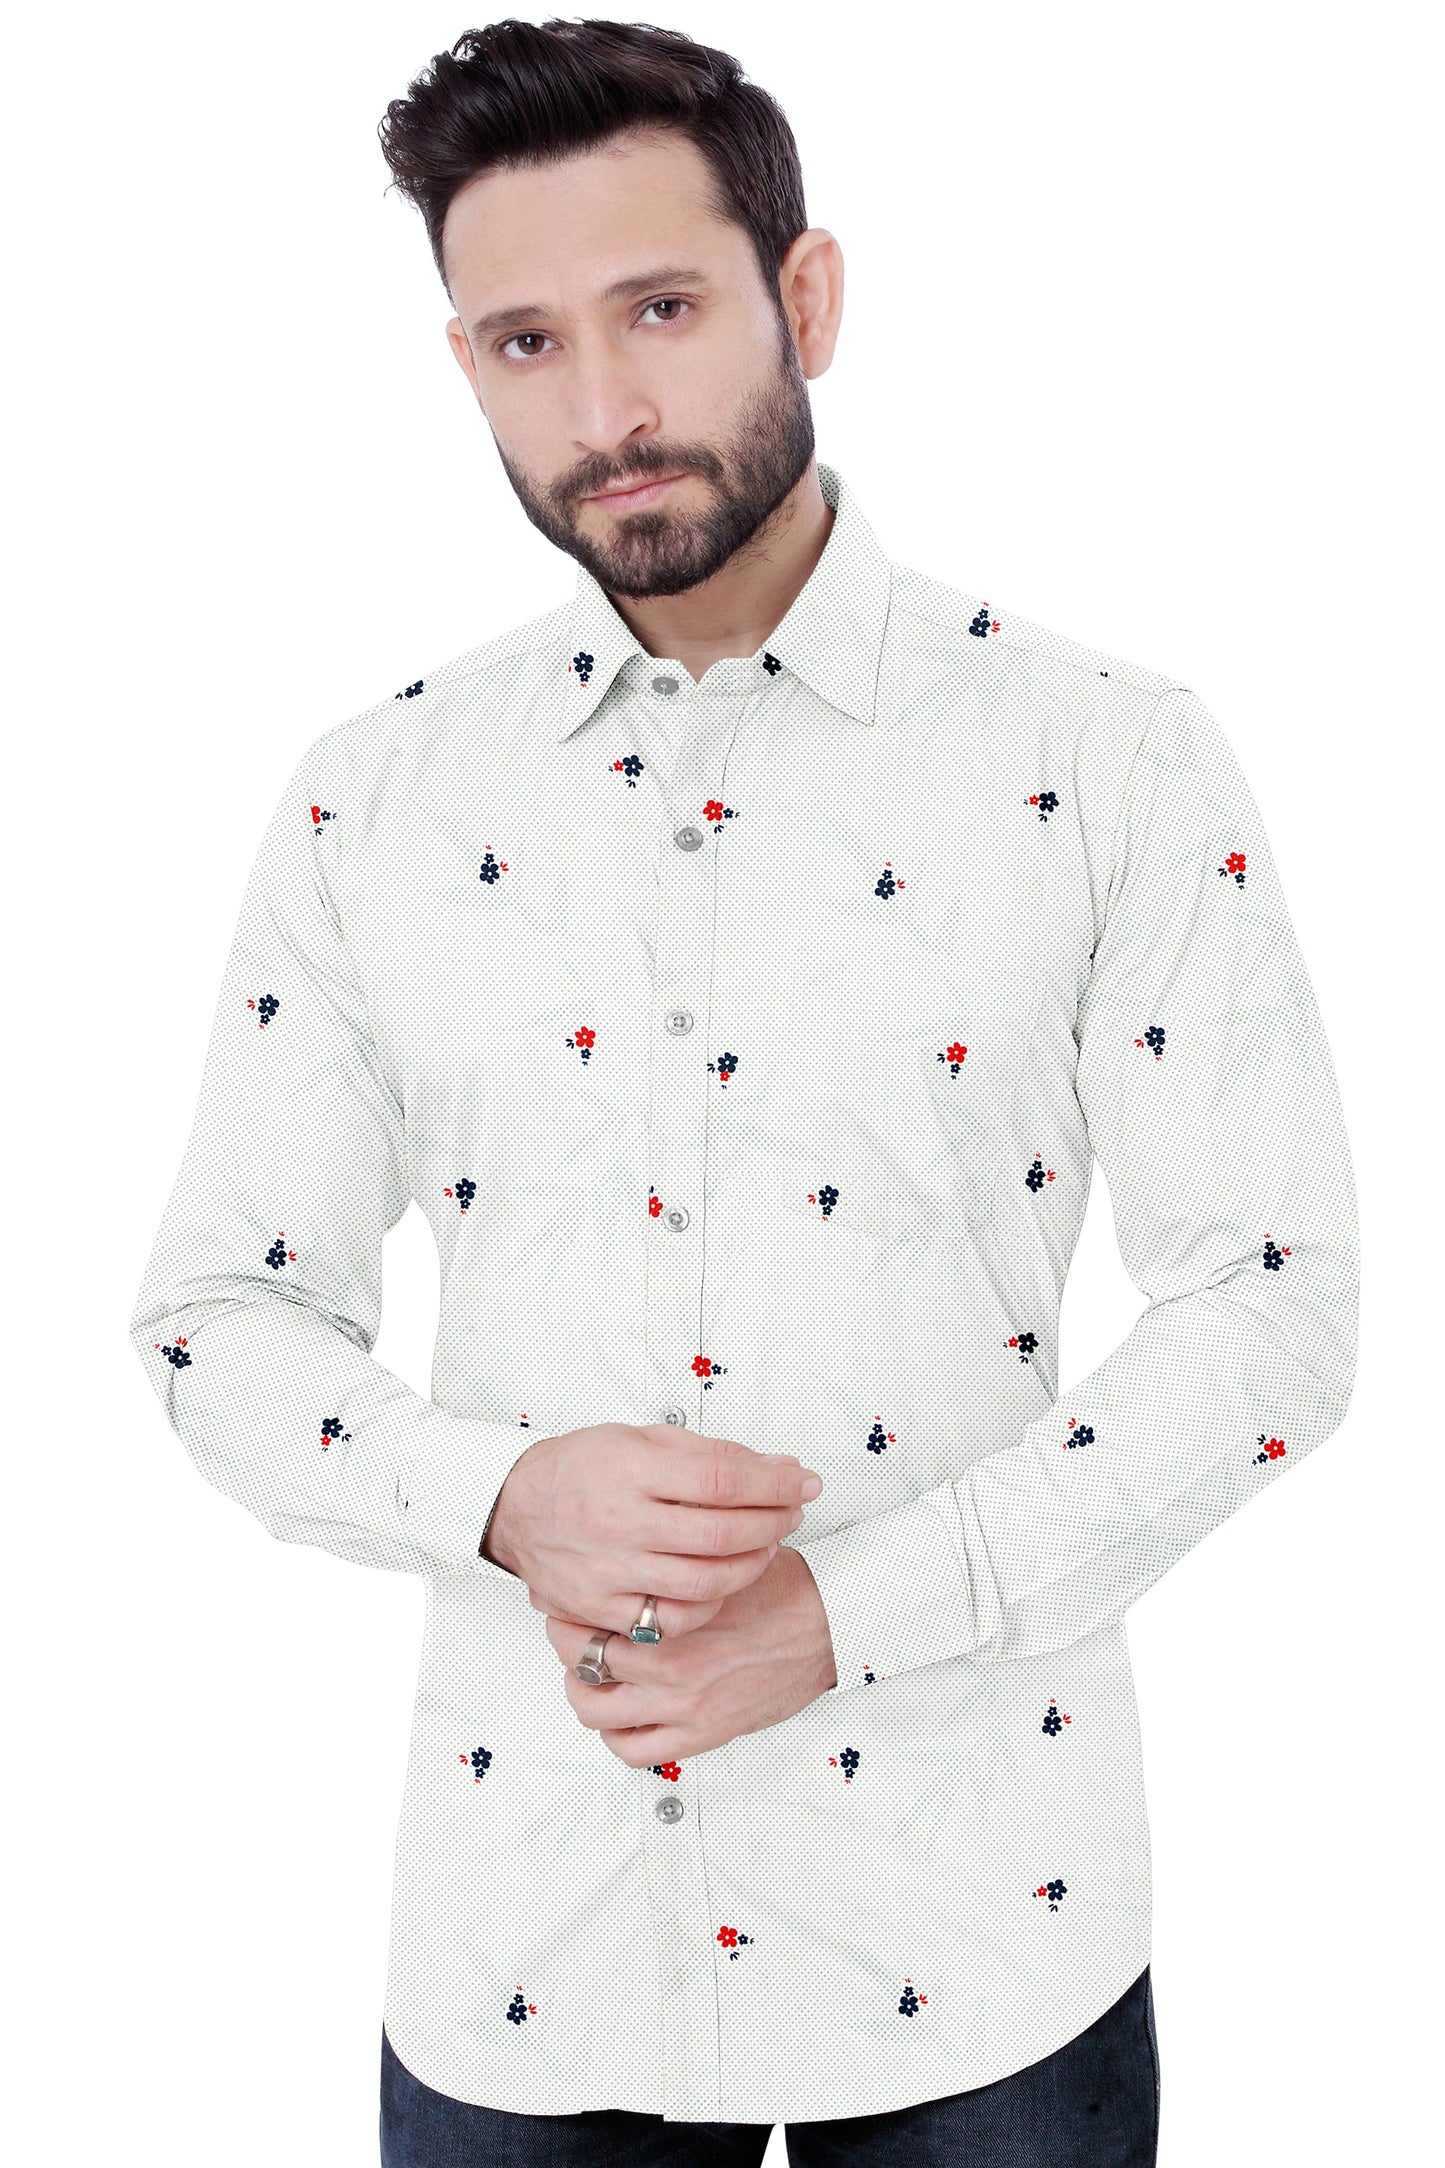 Men's White Flower Printed Casual Shirt Full Sleeves 100% Cotton 